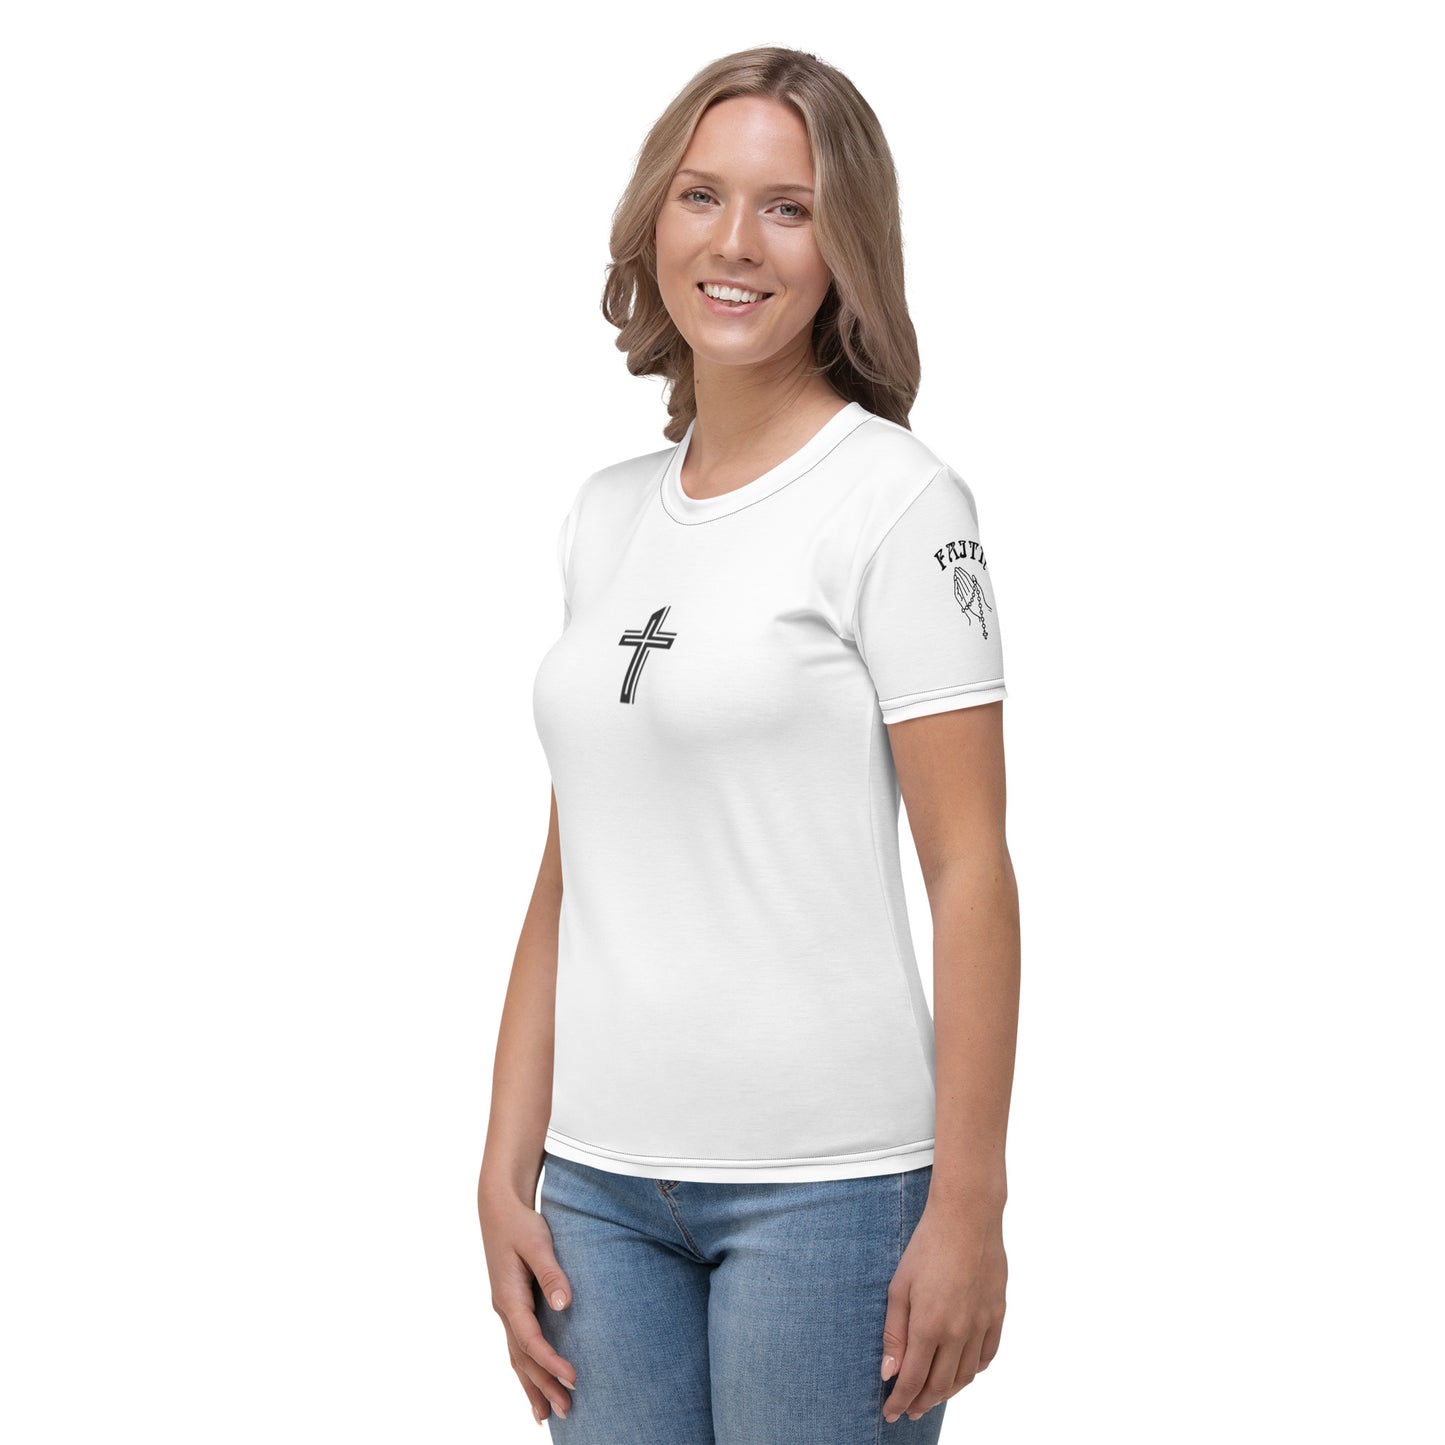 Jesus 954 Women's T-shirt